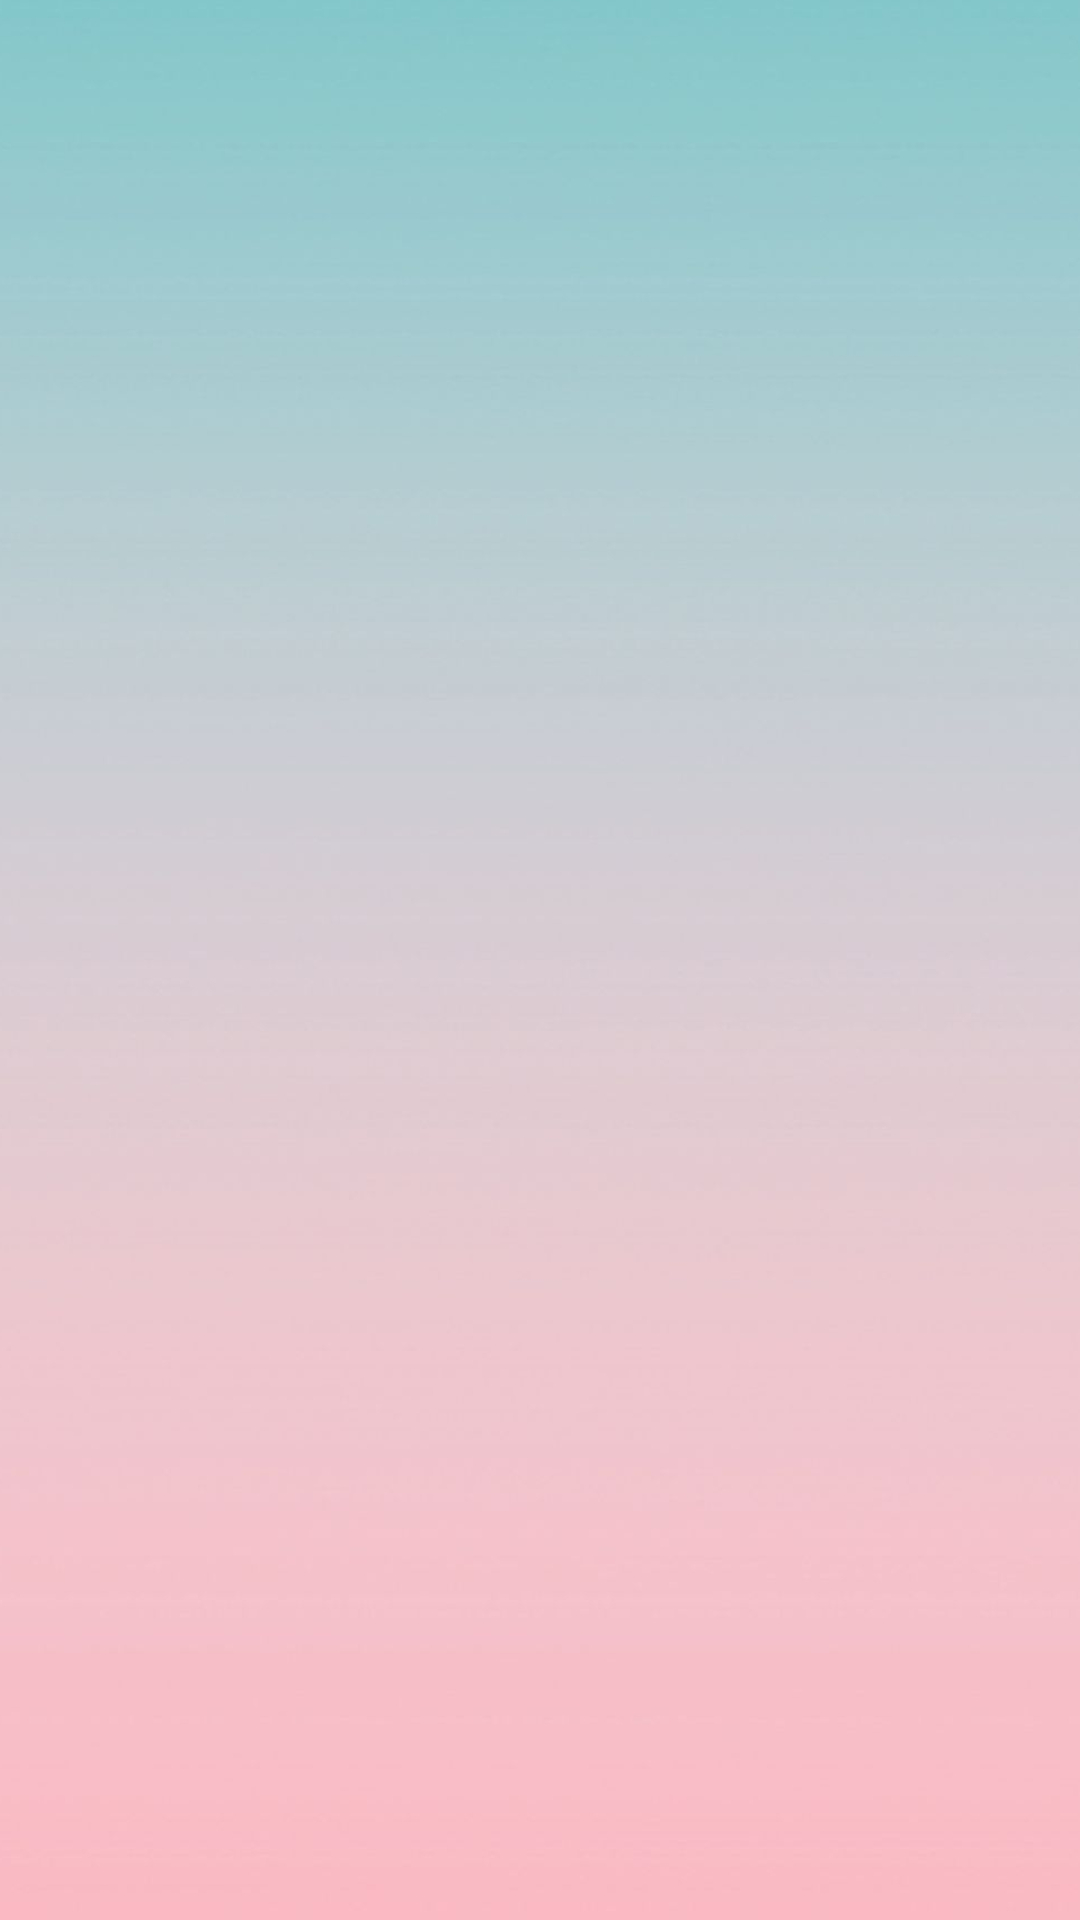 1080x1920 modern blue pink gradient ombre iphone wallpaper by audrey chenal #wallpaper #gradient #om&acirc;&#128;&brvbar; | Fondos de pantalla rosas, Fondos de pantalla liso, Fondos difuminados